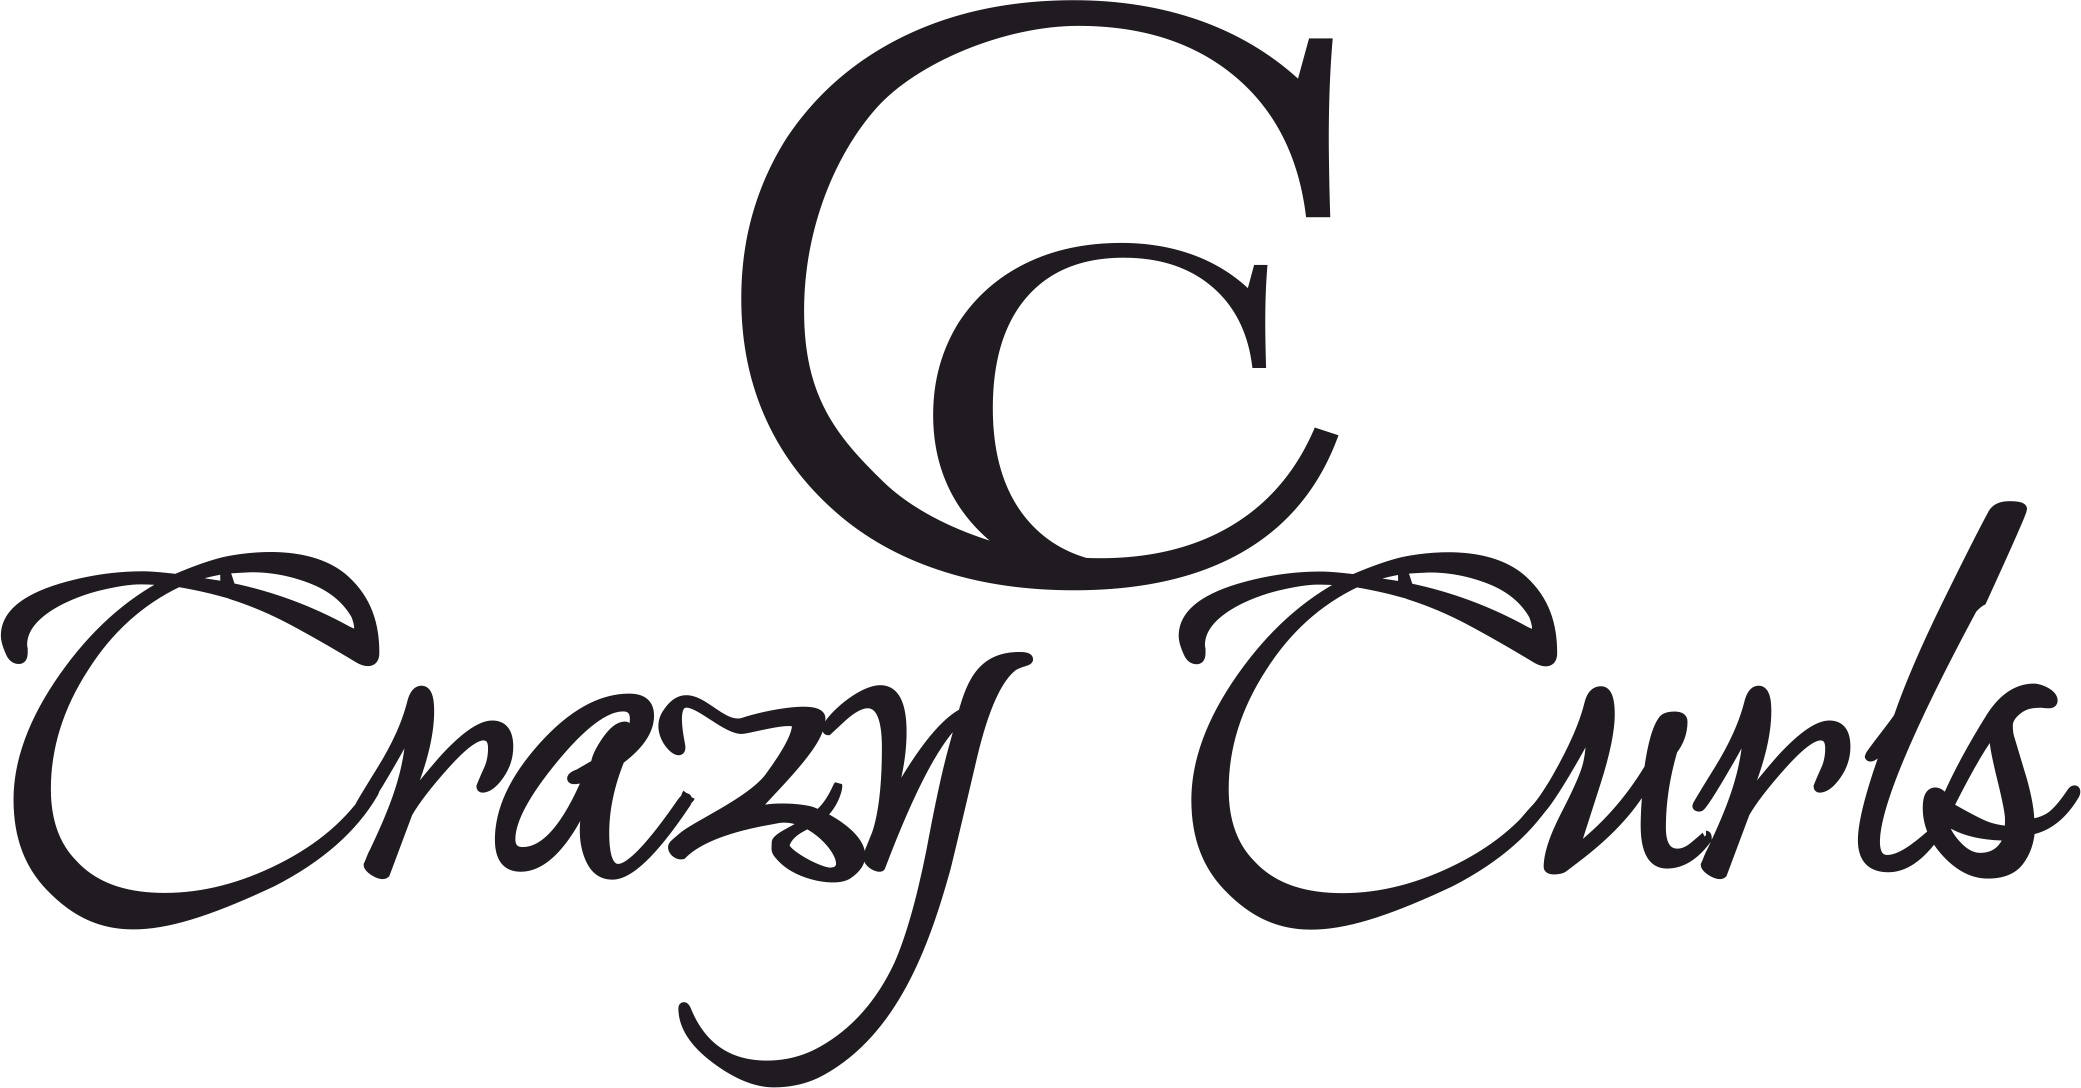 Logo for Crazy Curls